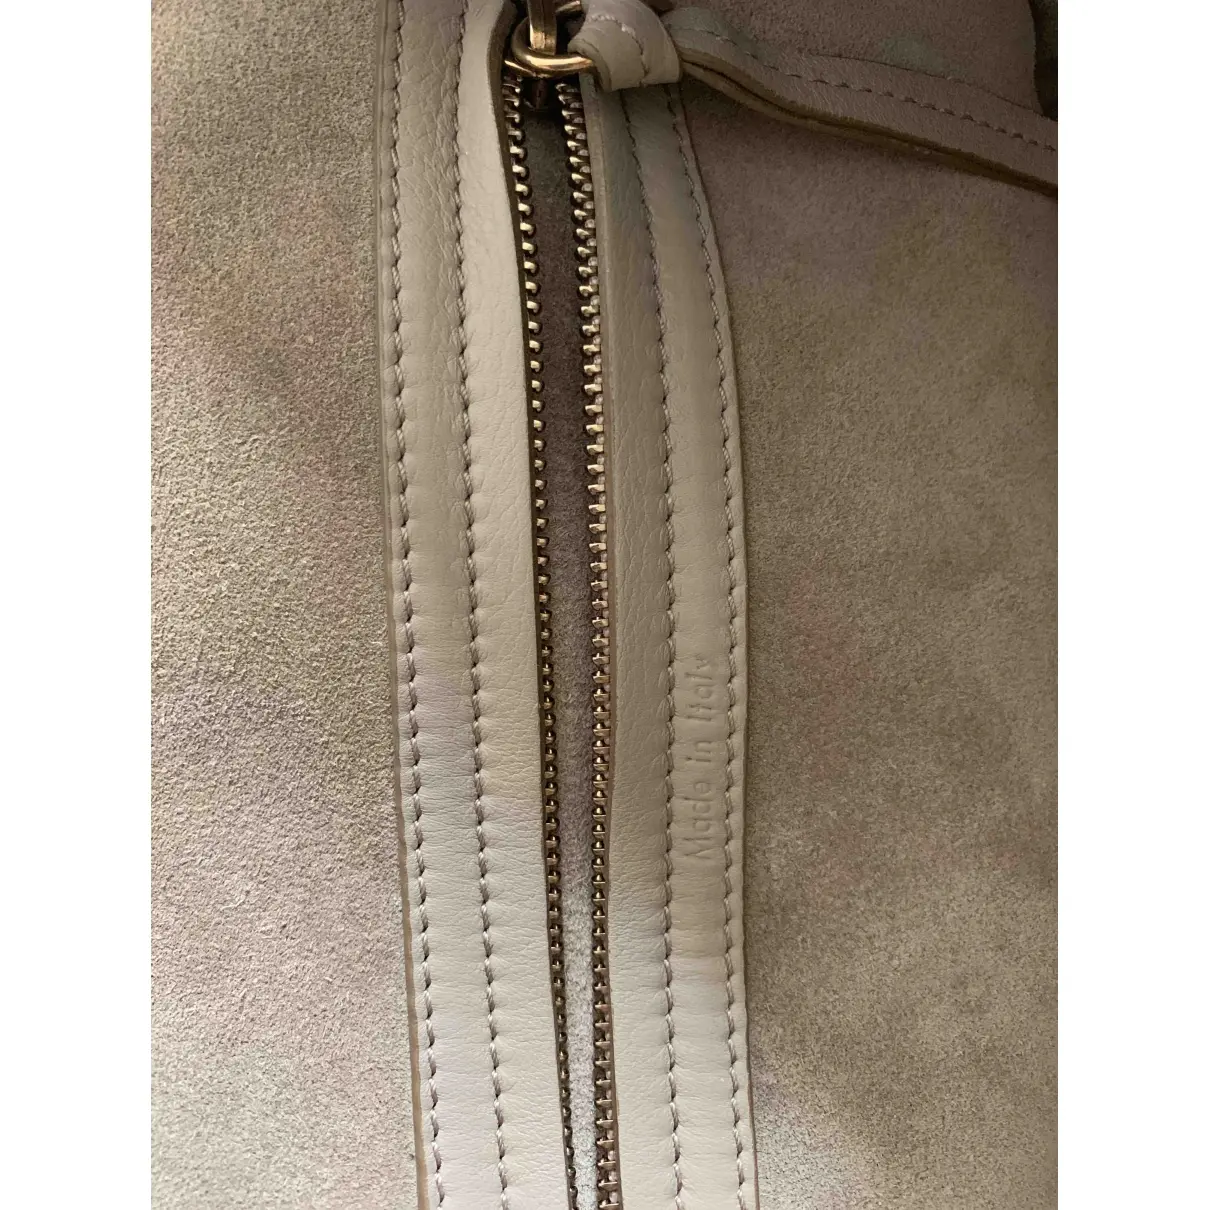 Buy Celine Luggage Phantom leather handbag online